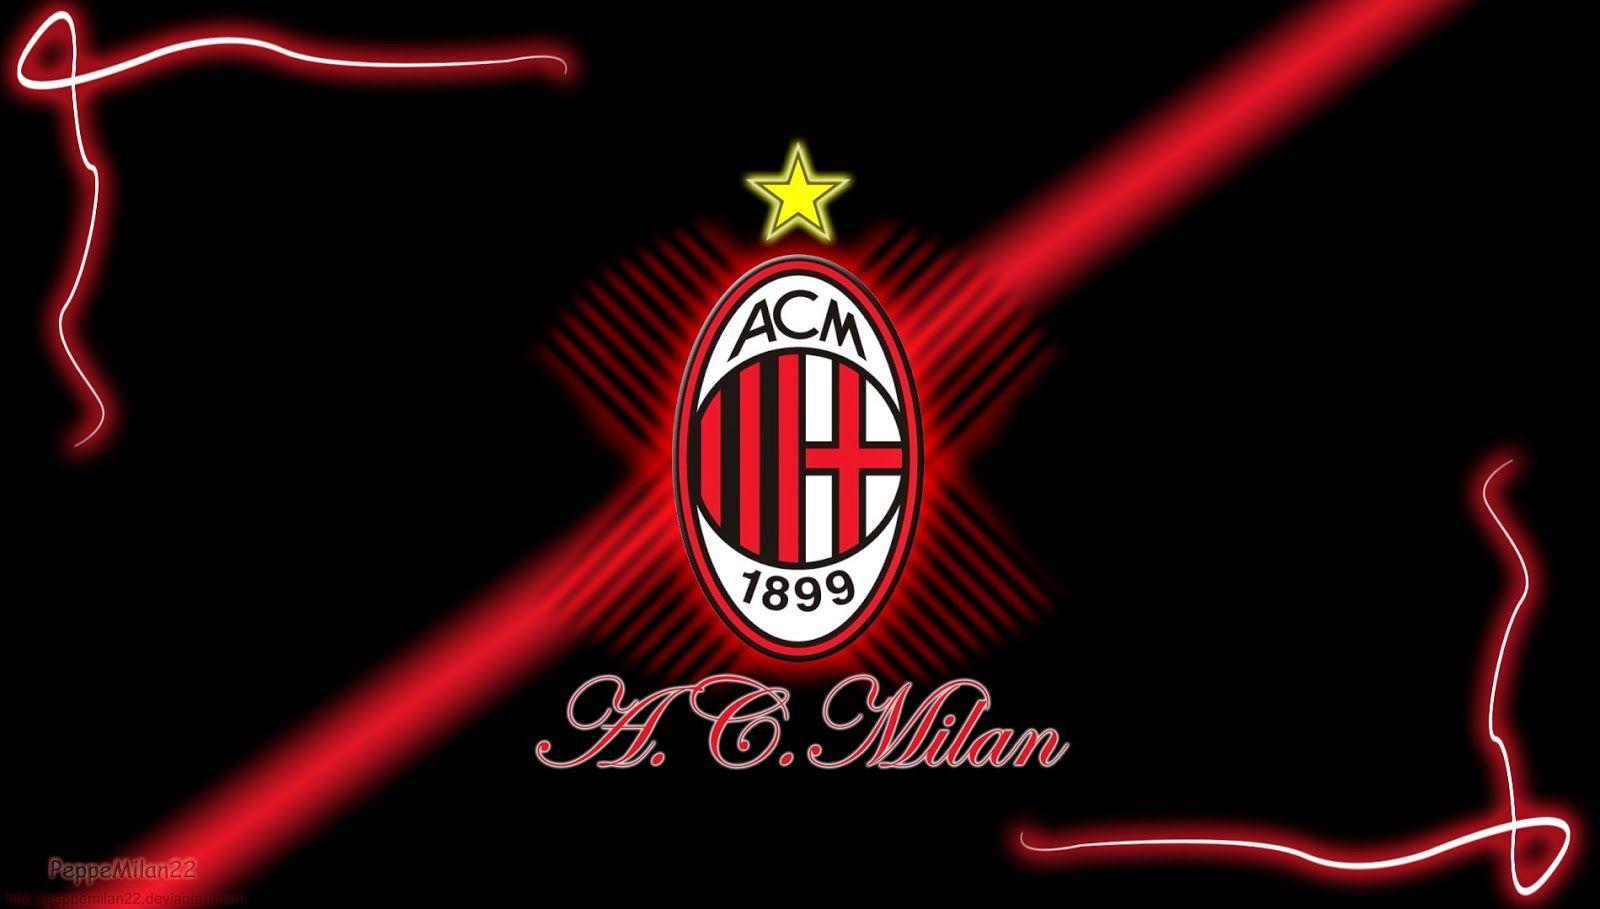 IDN FOOTBALLCLUB WALLPAPER: AC Milan Football Club Wallpaper